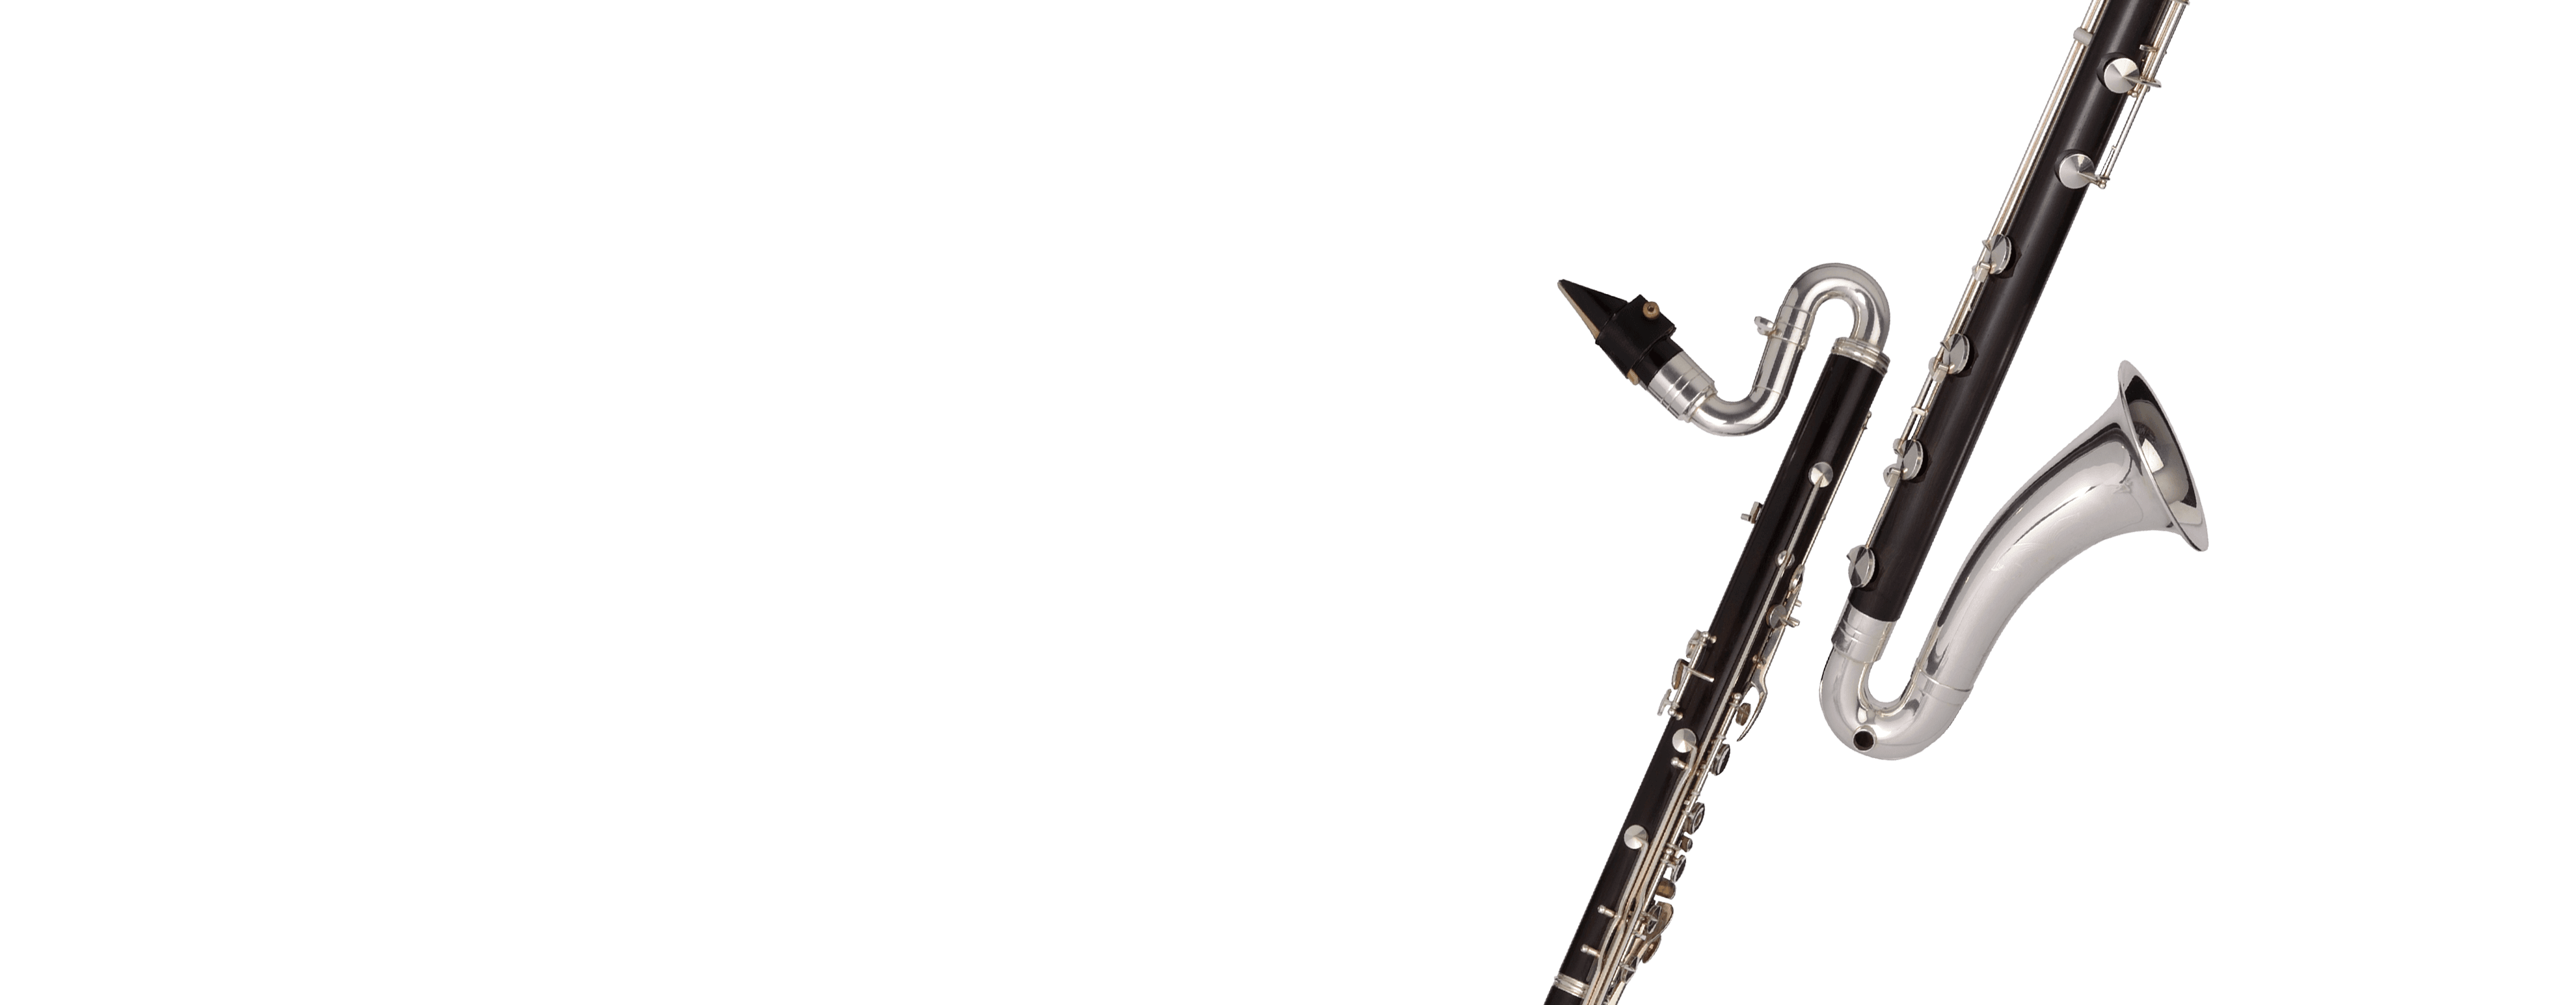 easy bass clarinet music